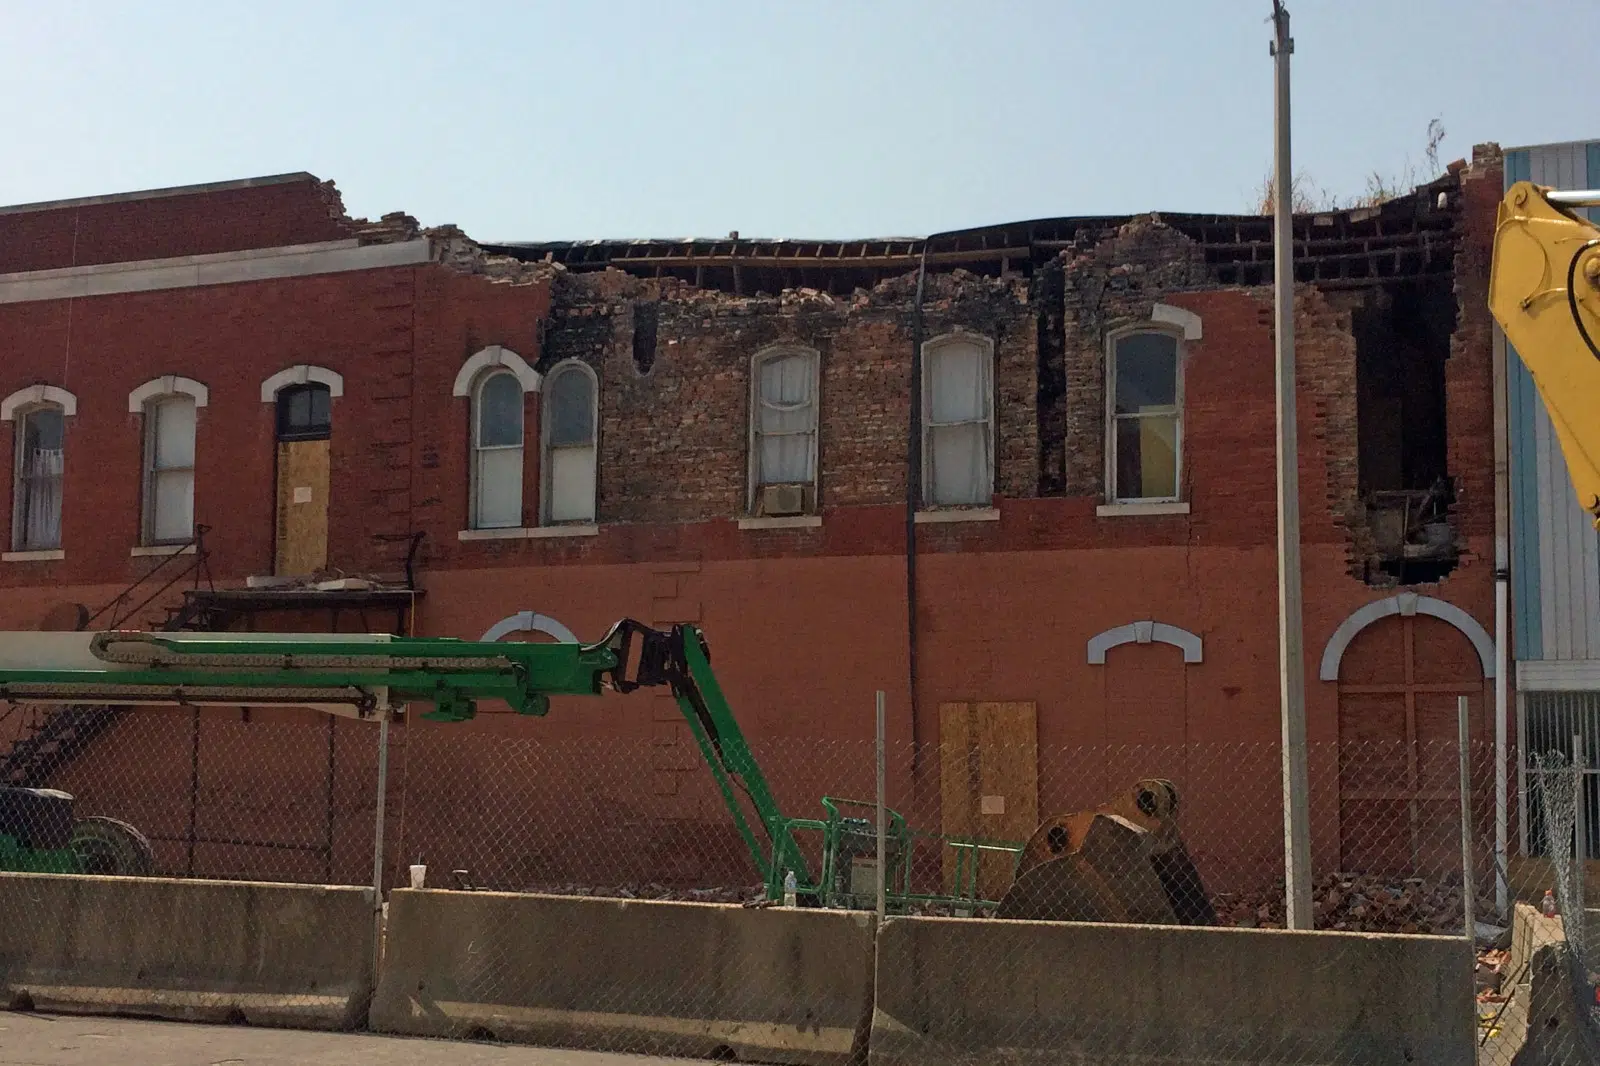 Demolition work progressing on downtown buildings 